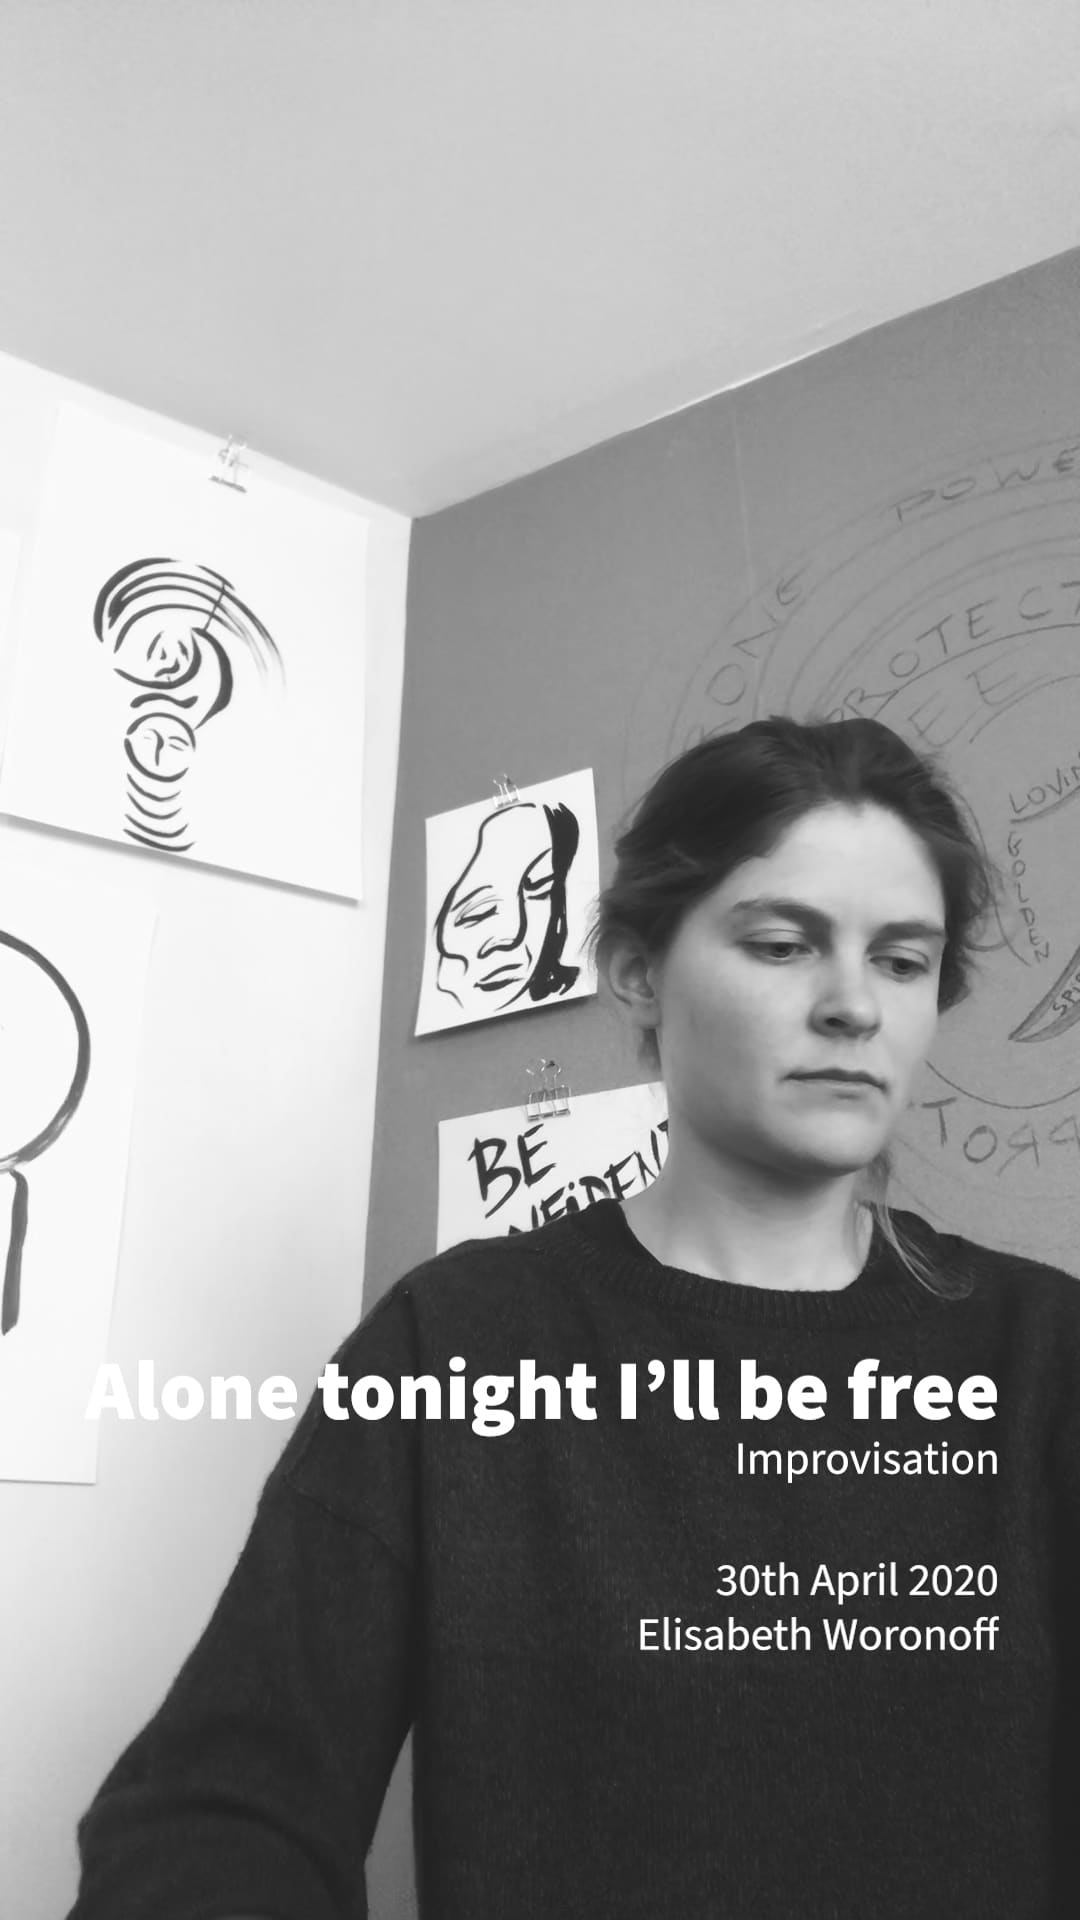 Alone tonight I'll be free